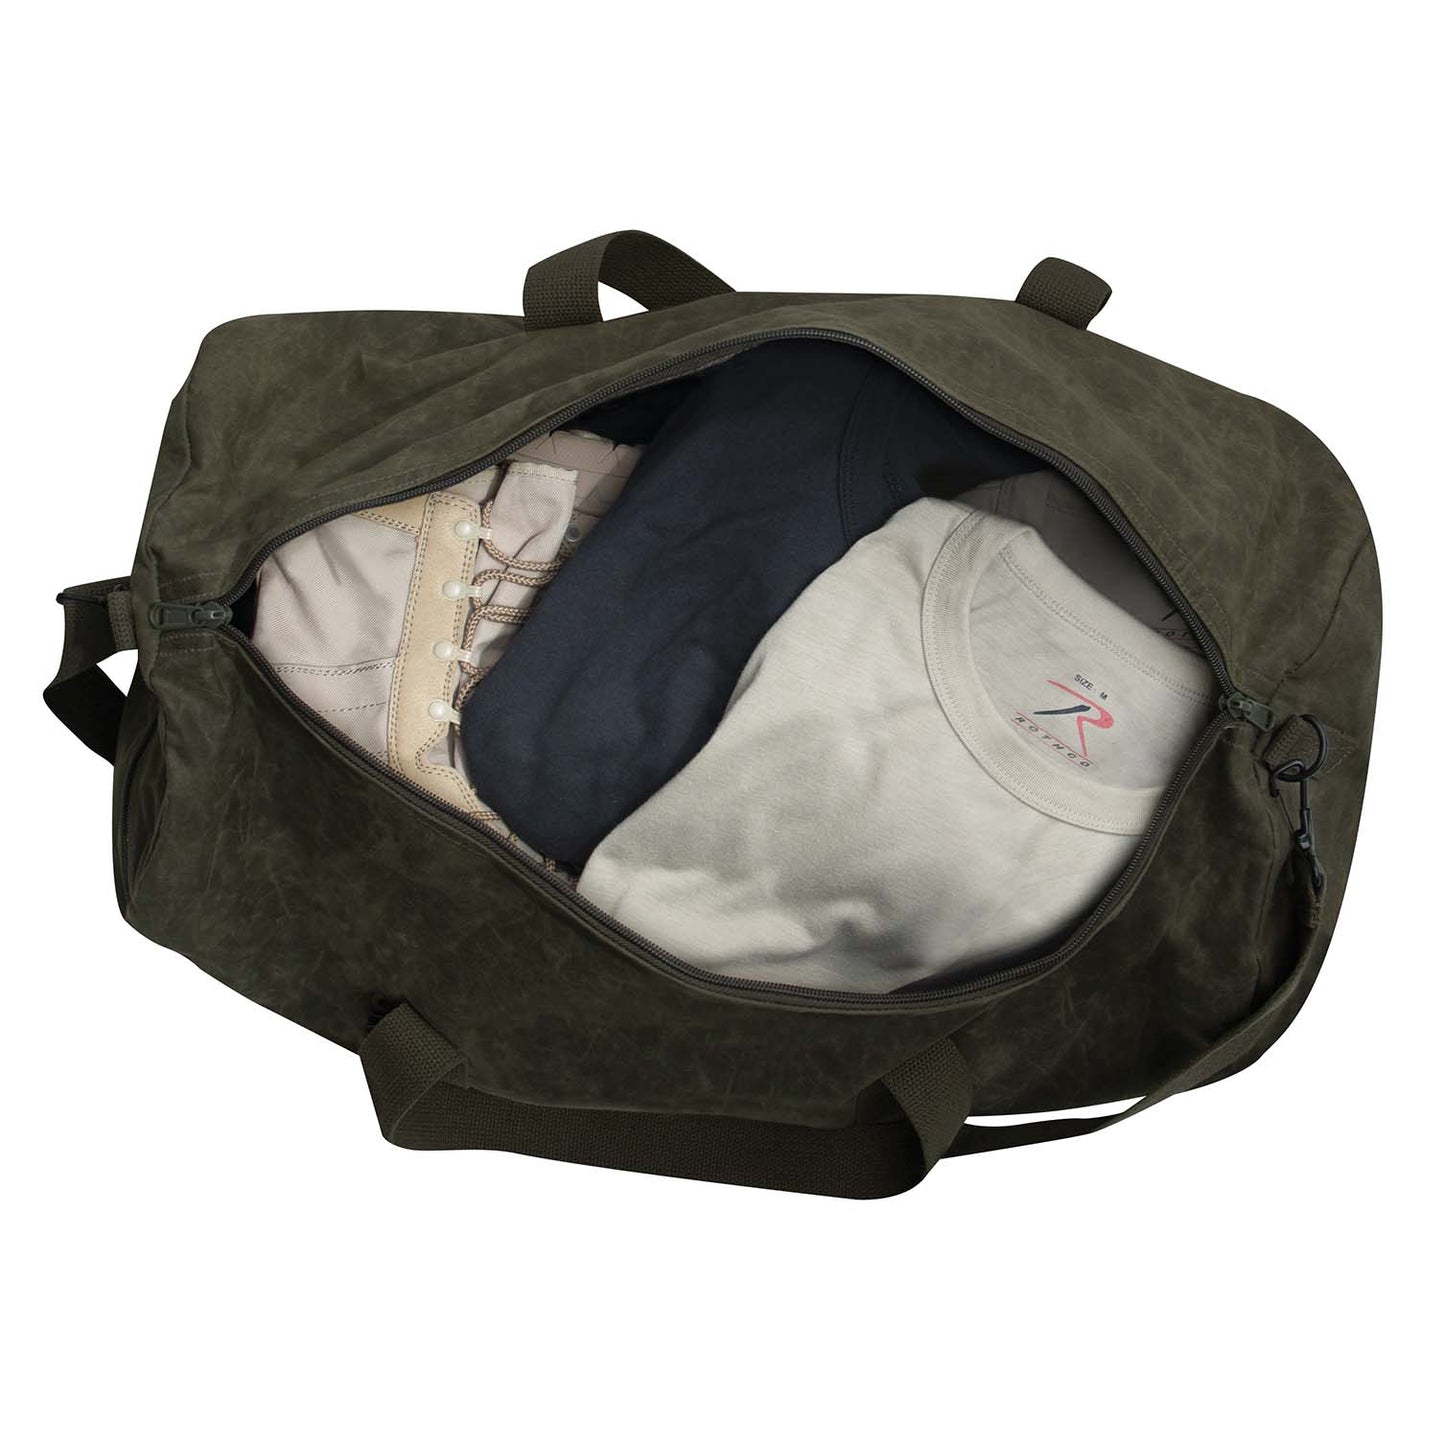 Rothco Waxed Canvas Shoulder Duffle Bag   24 Inch